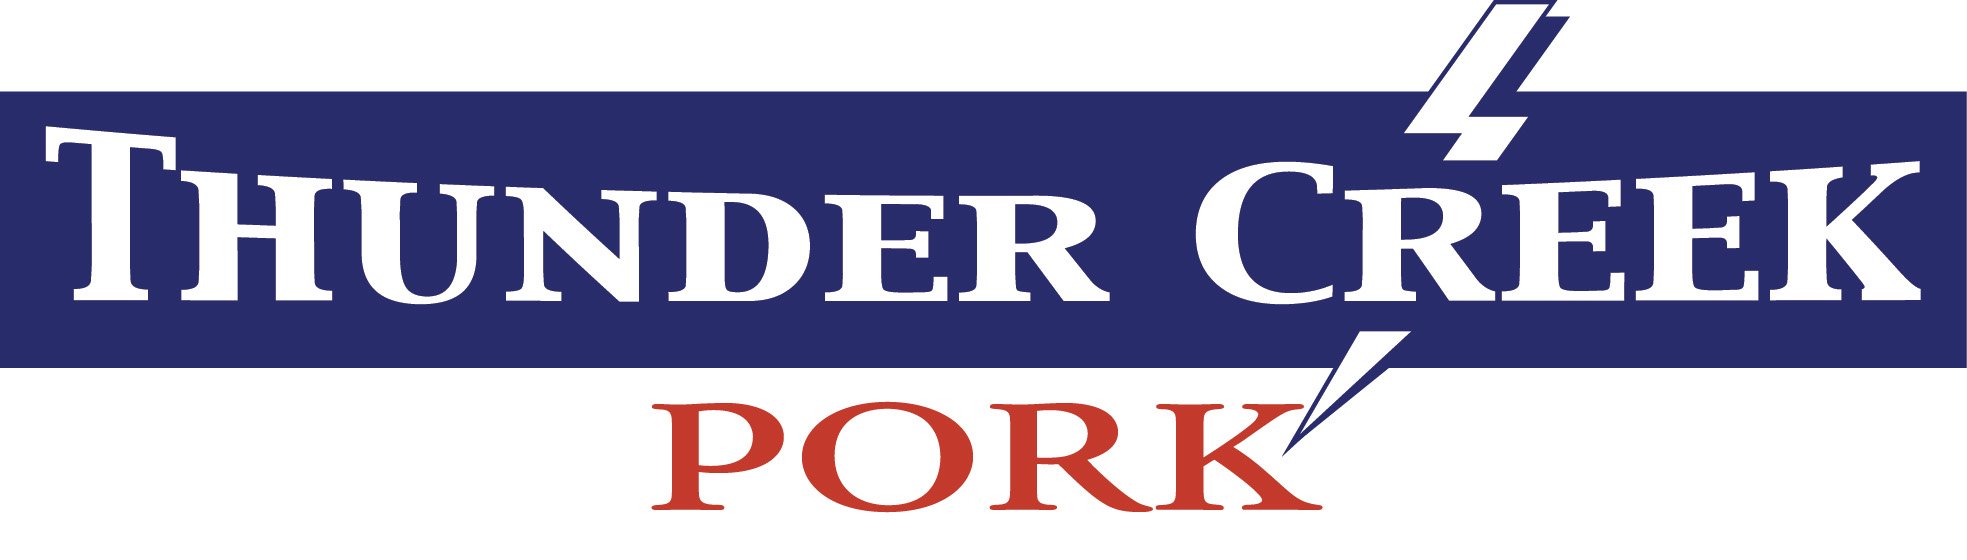 Thunder Creek Pork.jpg